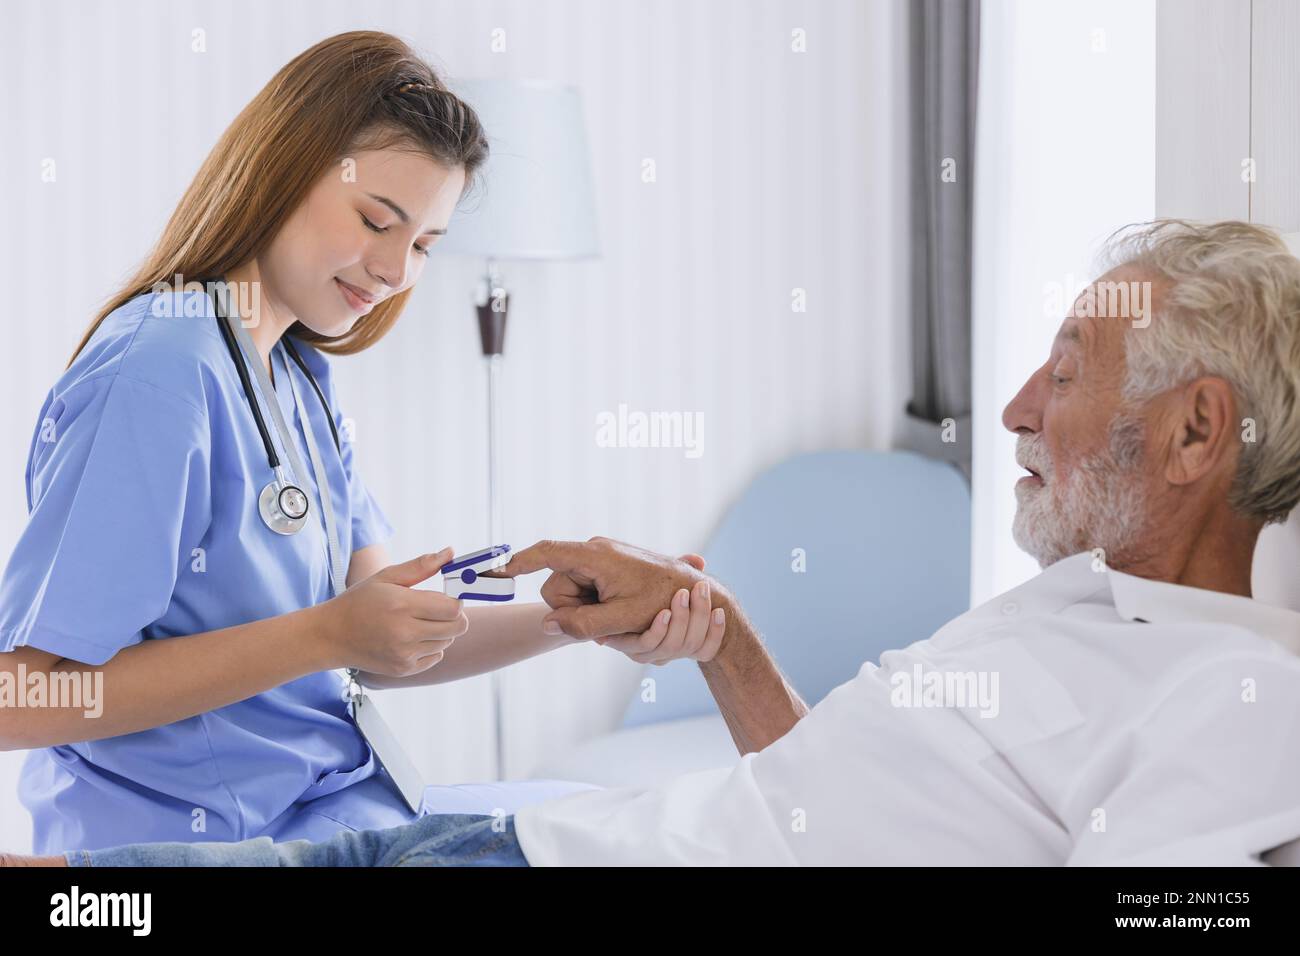 Nurse doctor working at home care medical checkup using fingertip pause oximeter measures blood oxygen saturation level senior elder Stock Photo